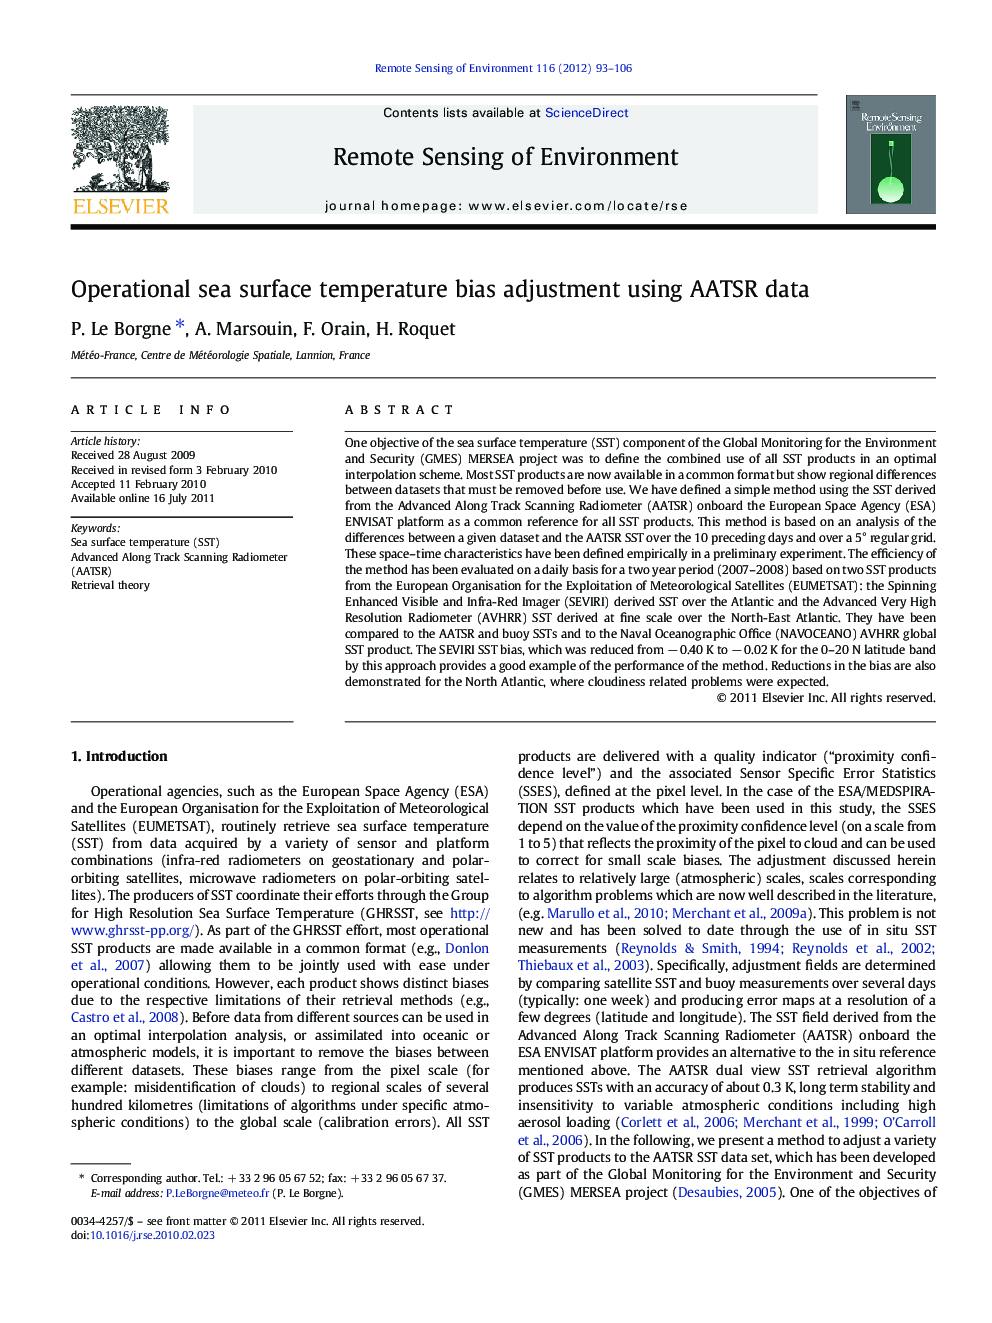 Operational sea surface temperature bias adjustment using AATSR data